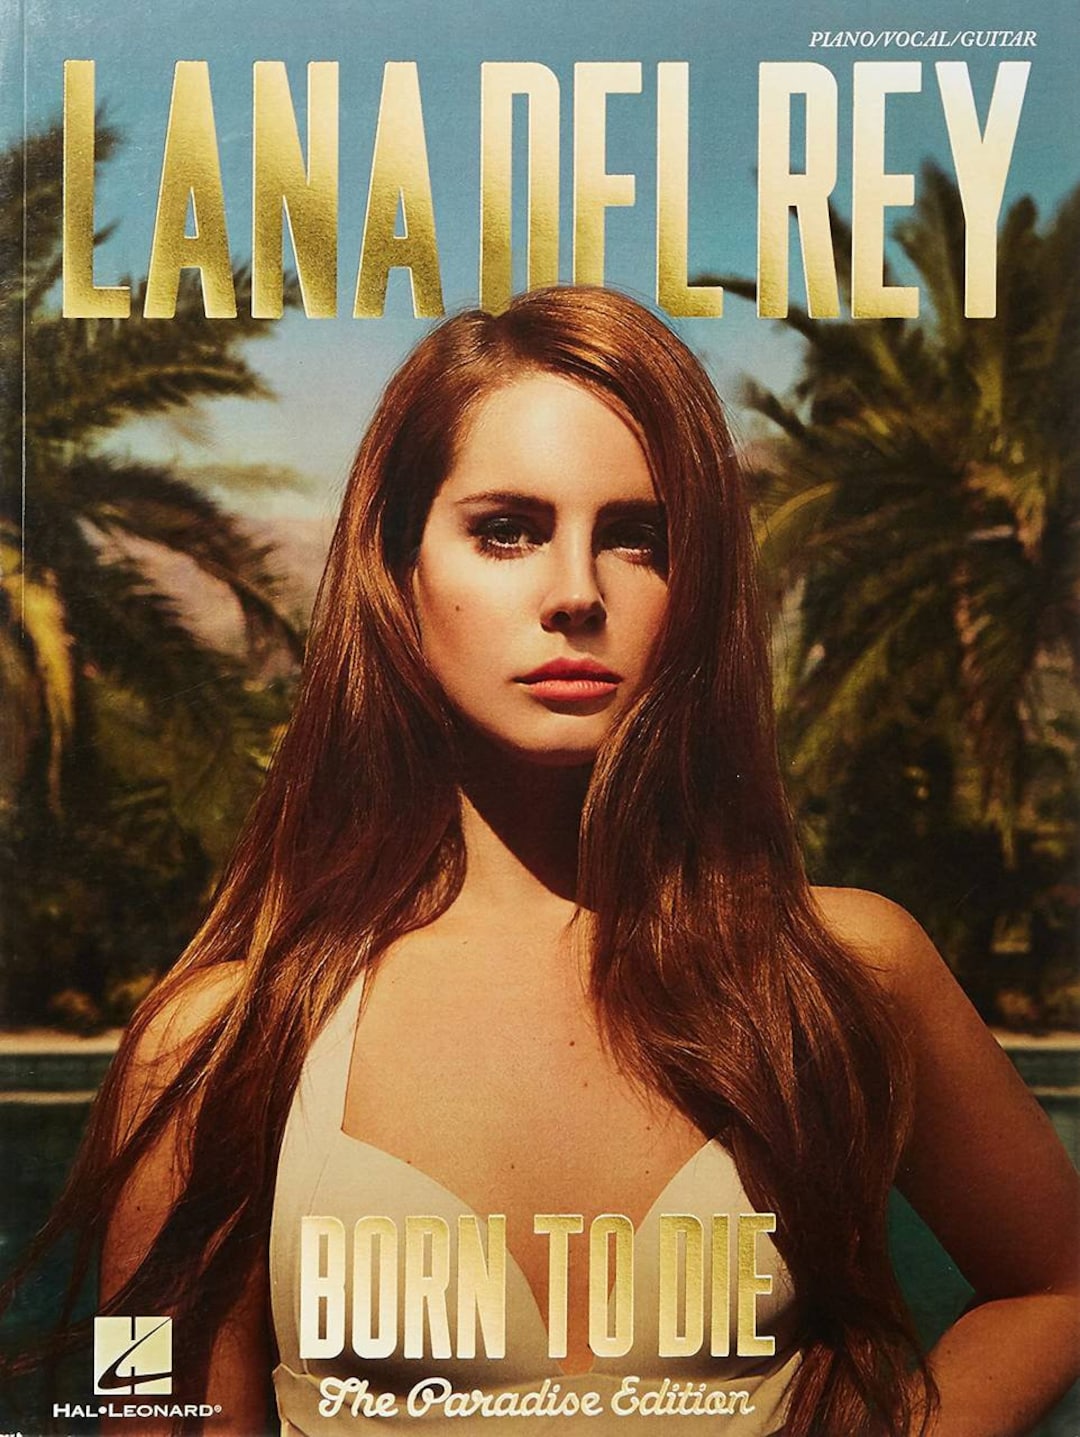 Lana Del Rey Poster 12x18 Inches Premium Quality Very Rare - Etsy